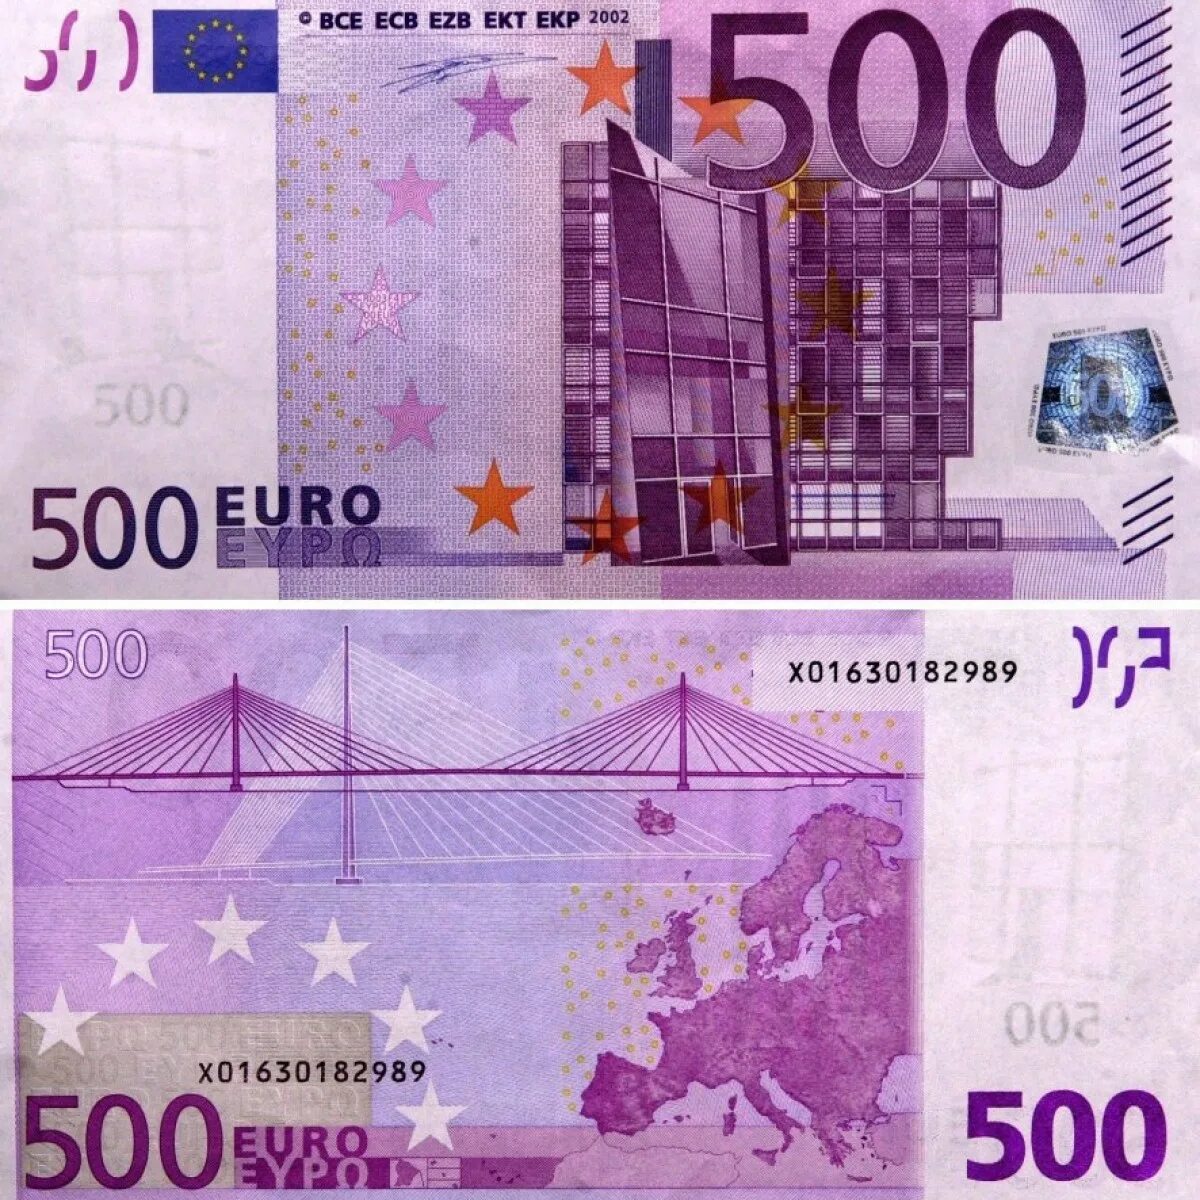 500 Евро купюра 2002. Банкнота 500 евро. 500 Евро купюра с двух сторон. Изображение 500 евро купюры.